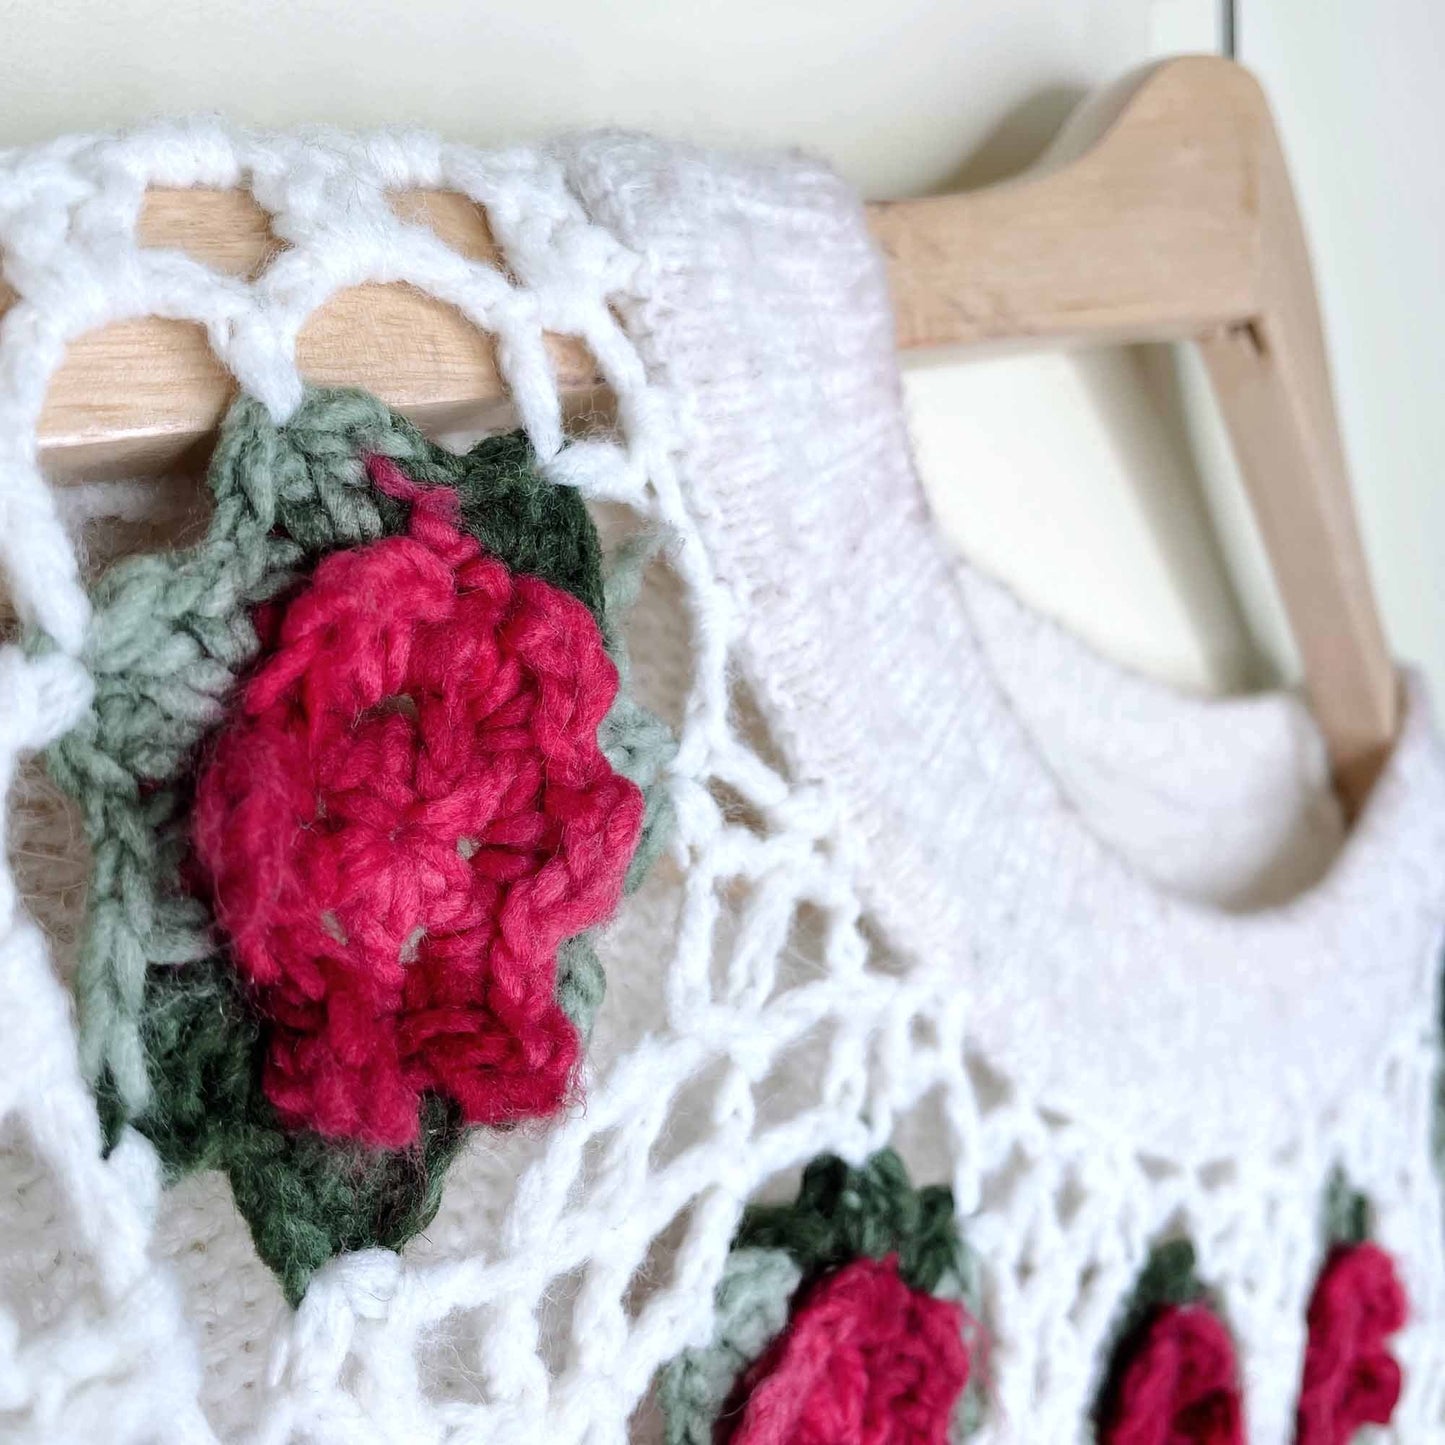 vintage crochet rose eyelash sweater - size small